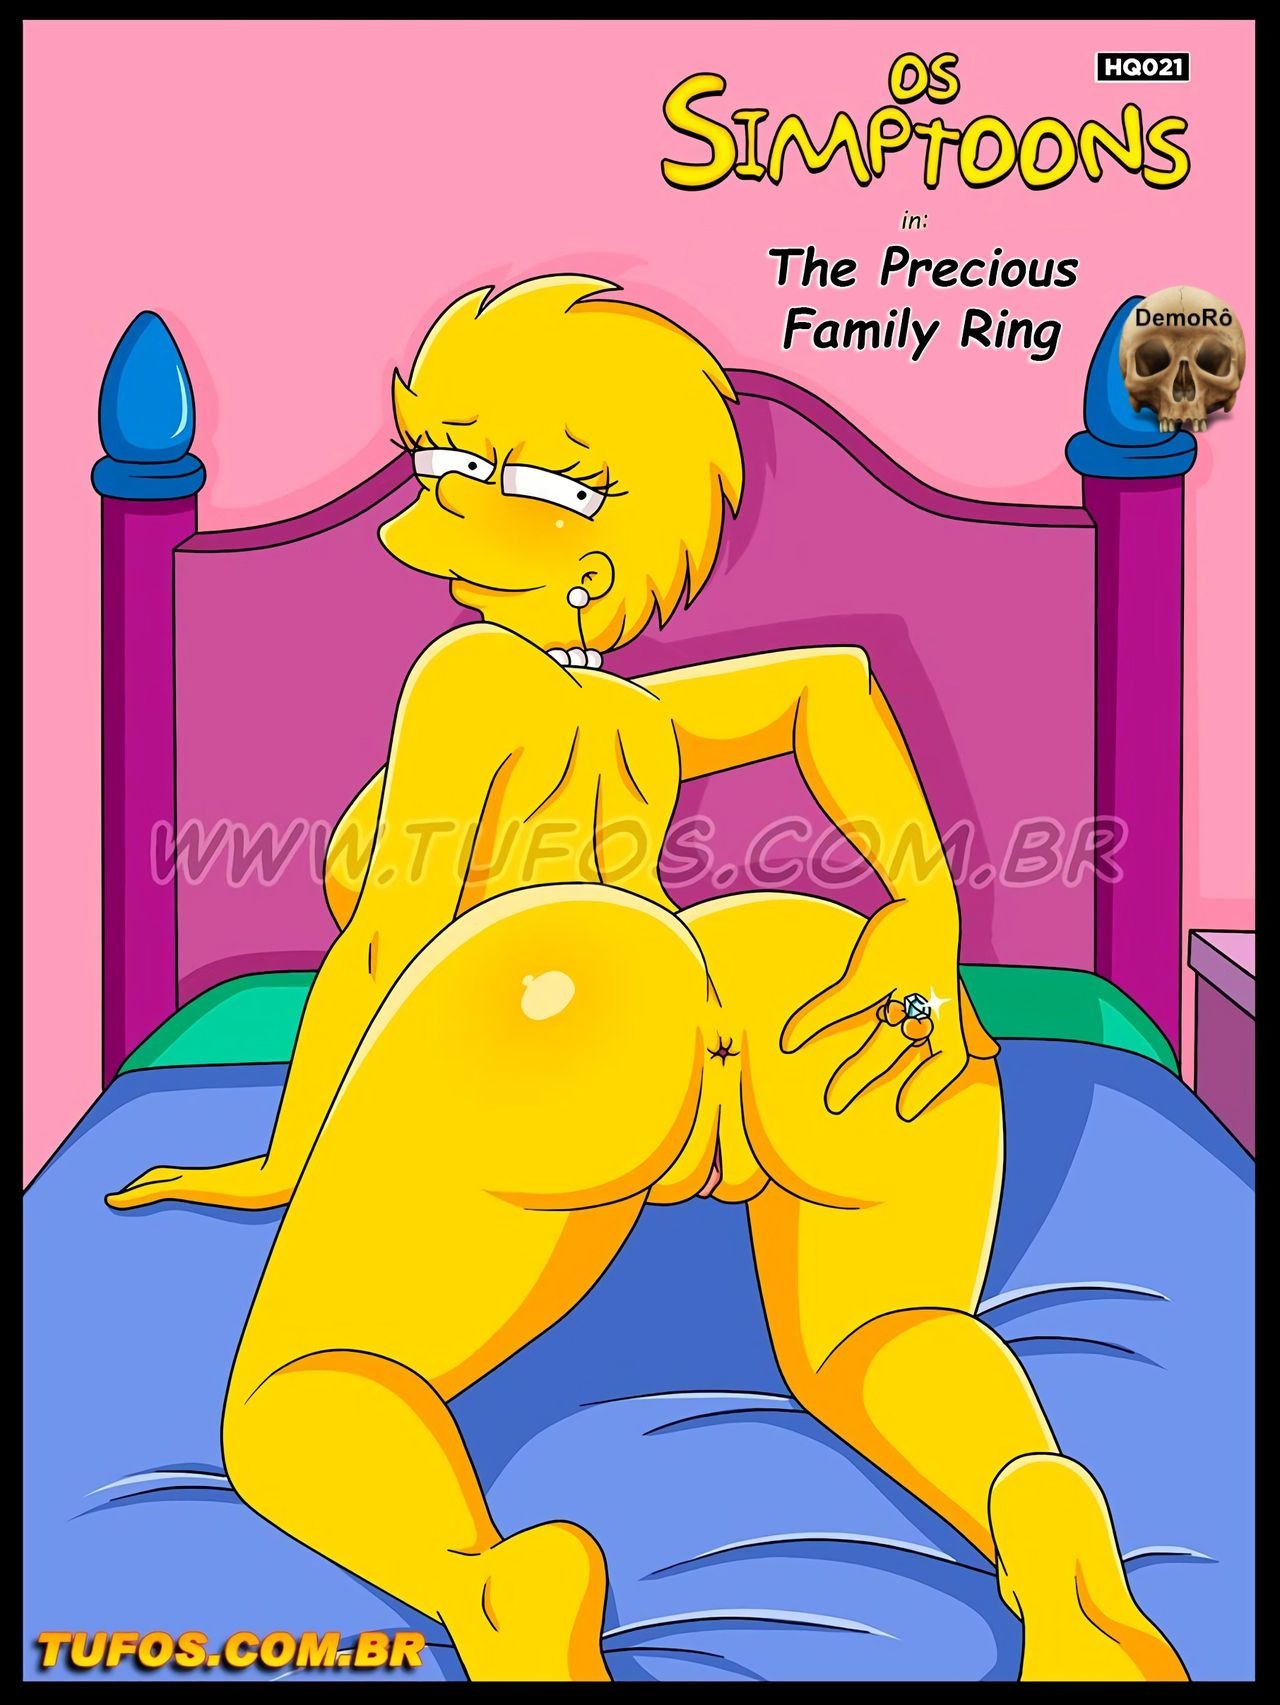 Beach [Tufos] The Simpsons - The Precious Family Ring Pierced